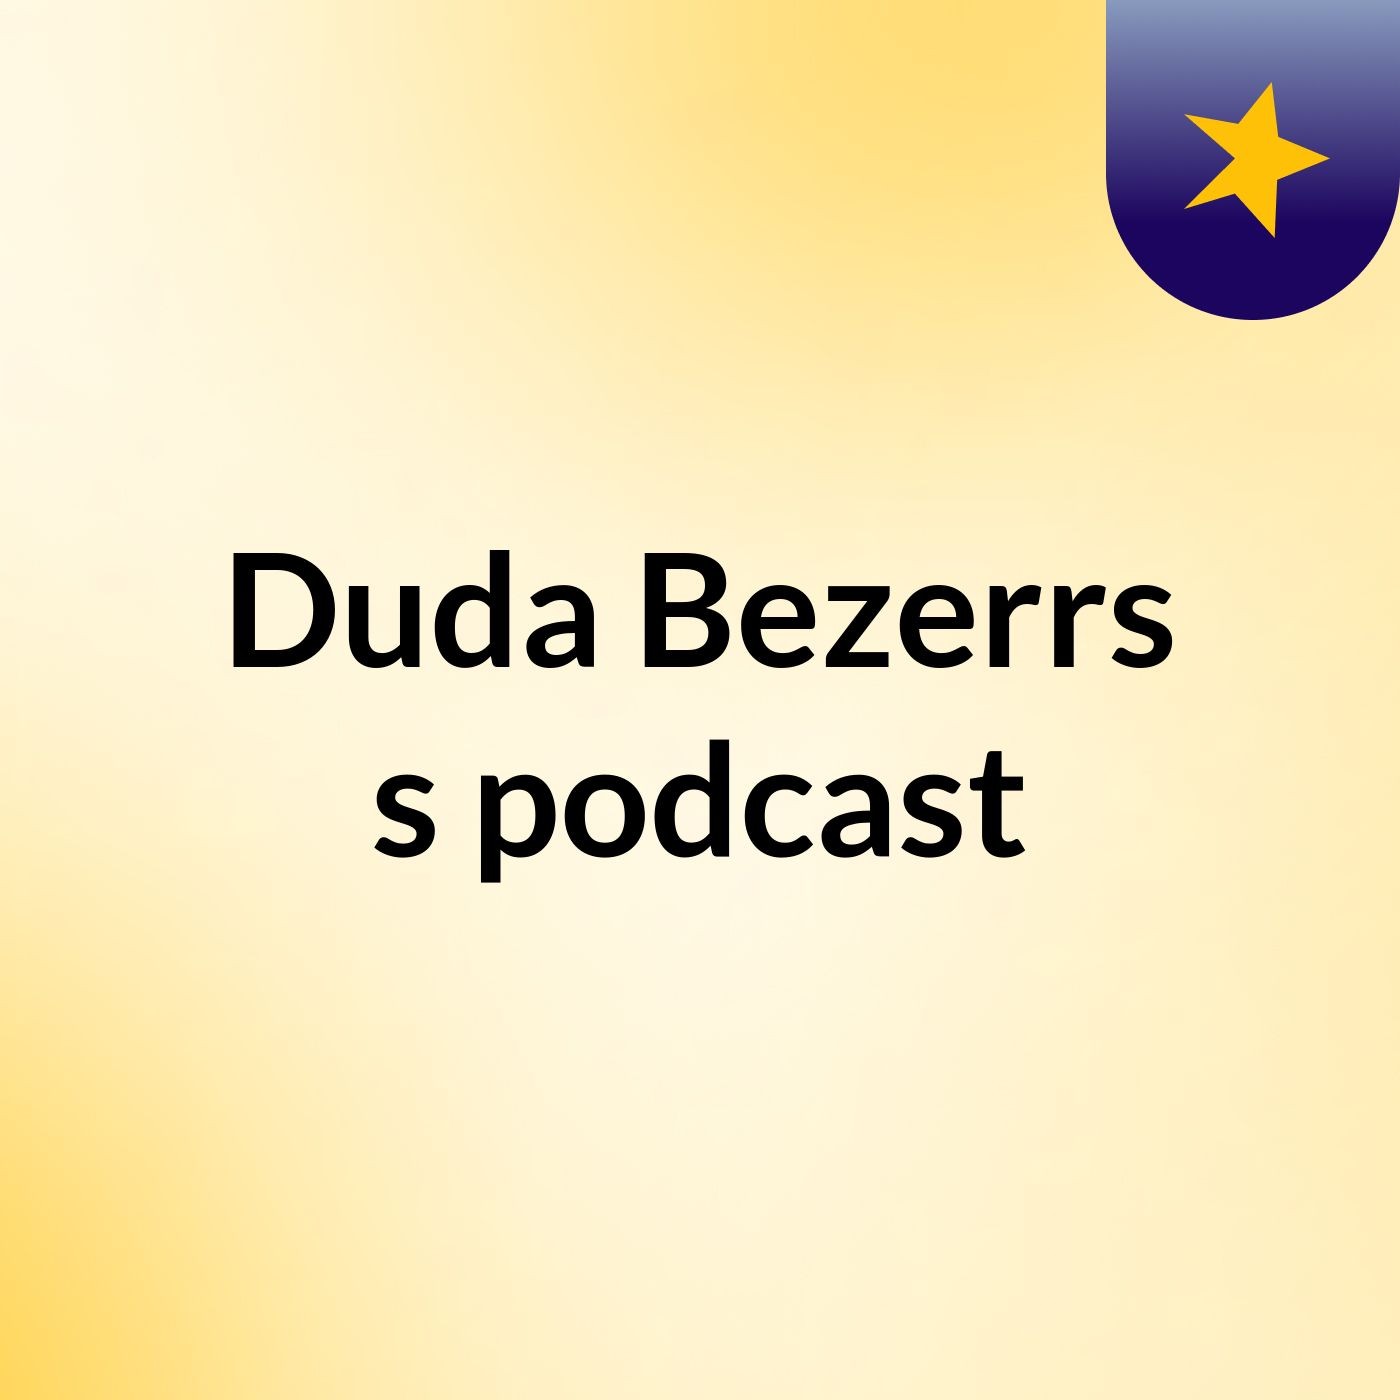 Duda Bezerrs's podcast